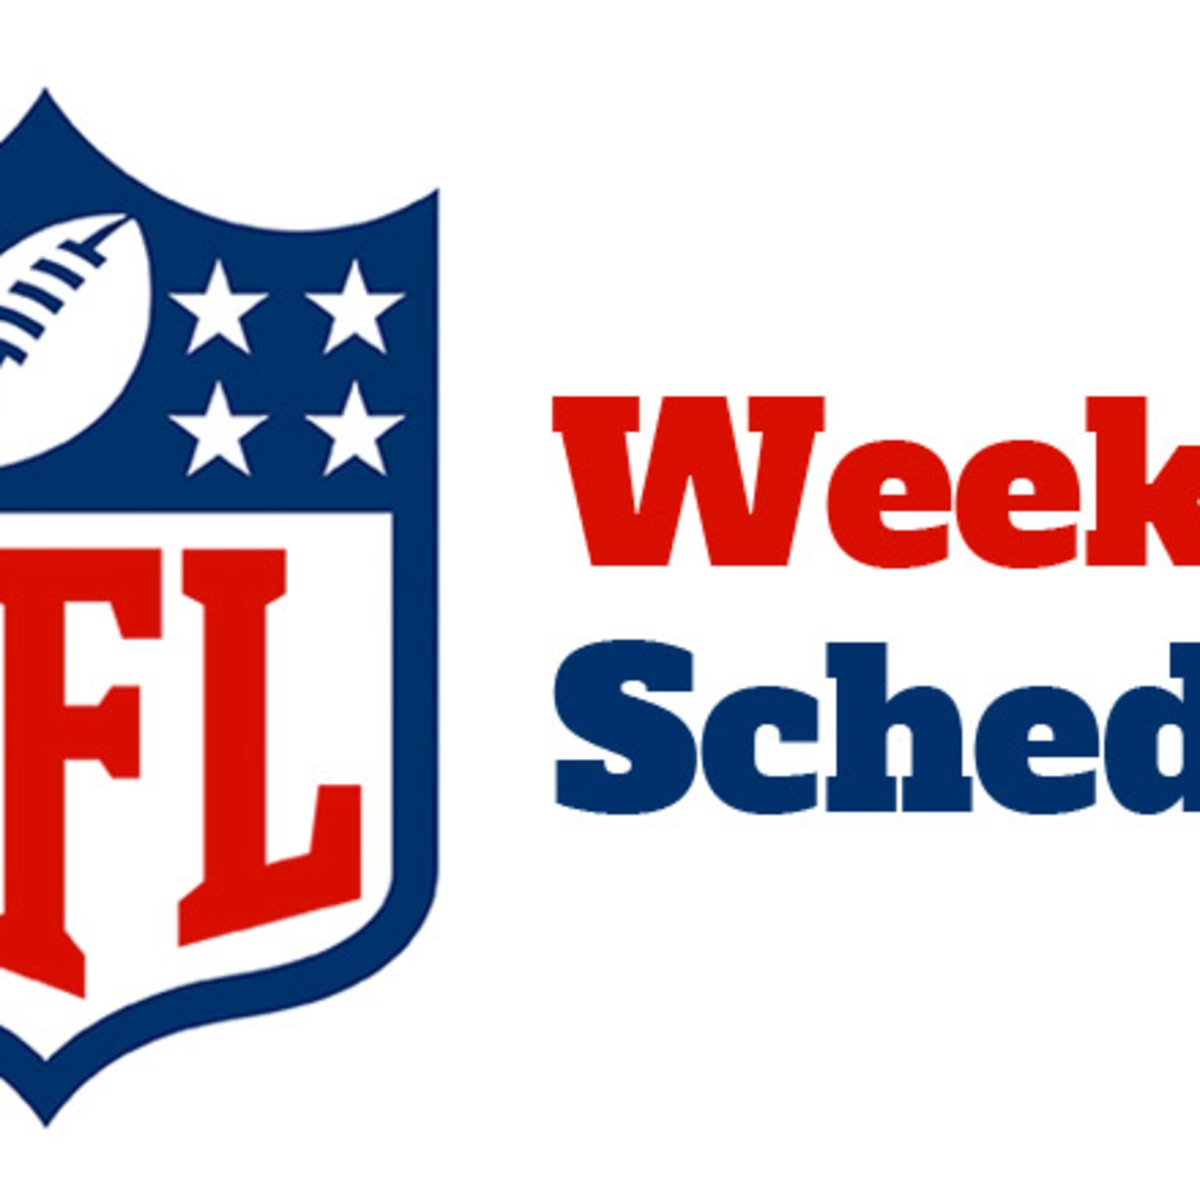 NFL Week 2 Schedule 2022 